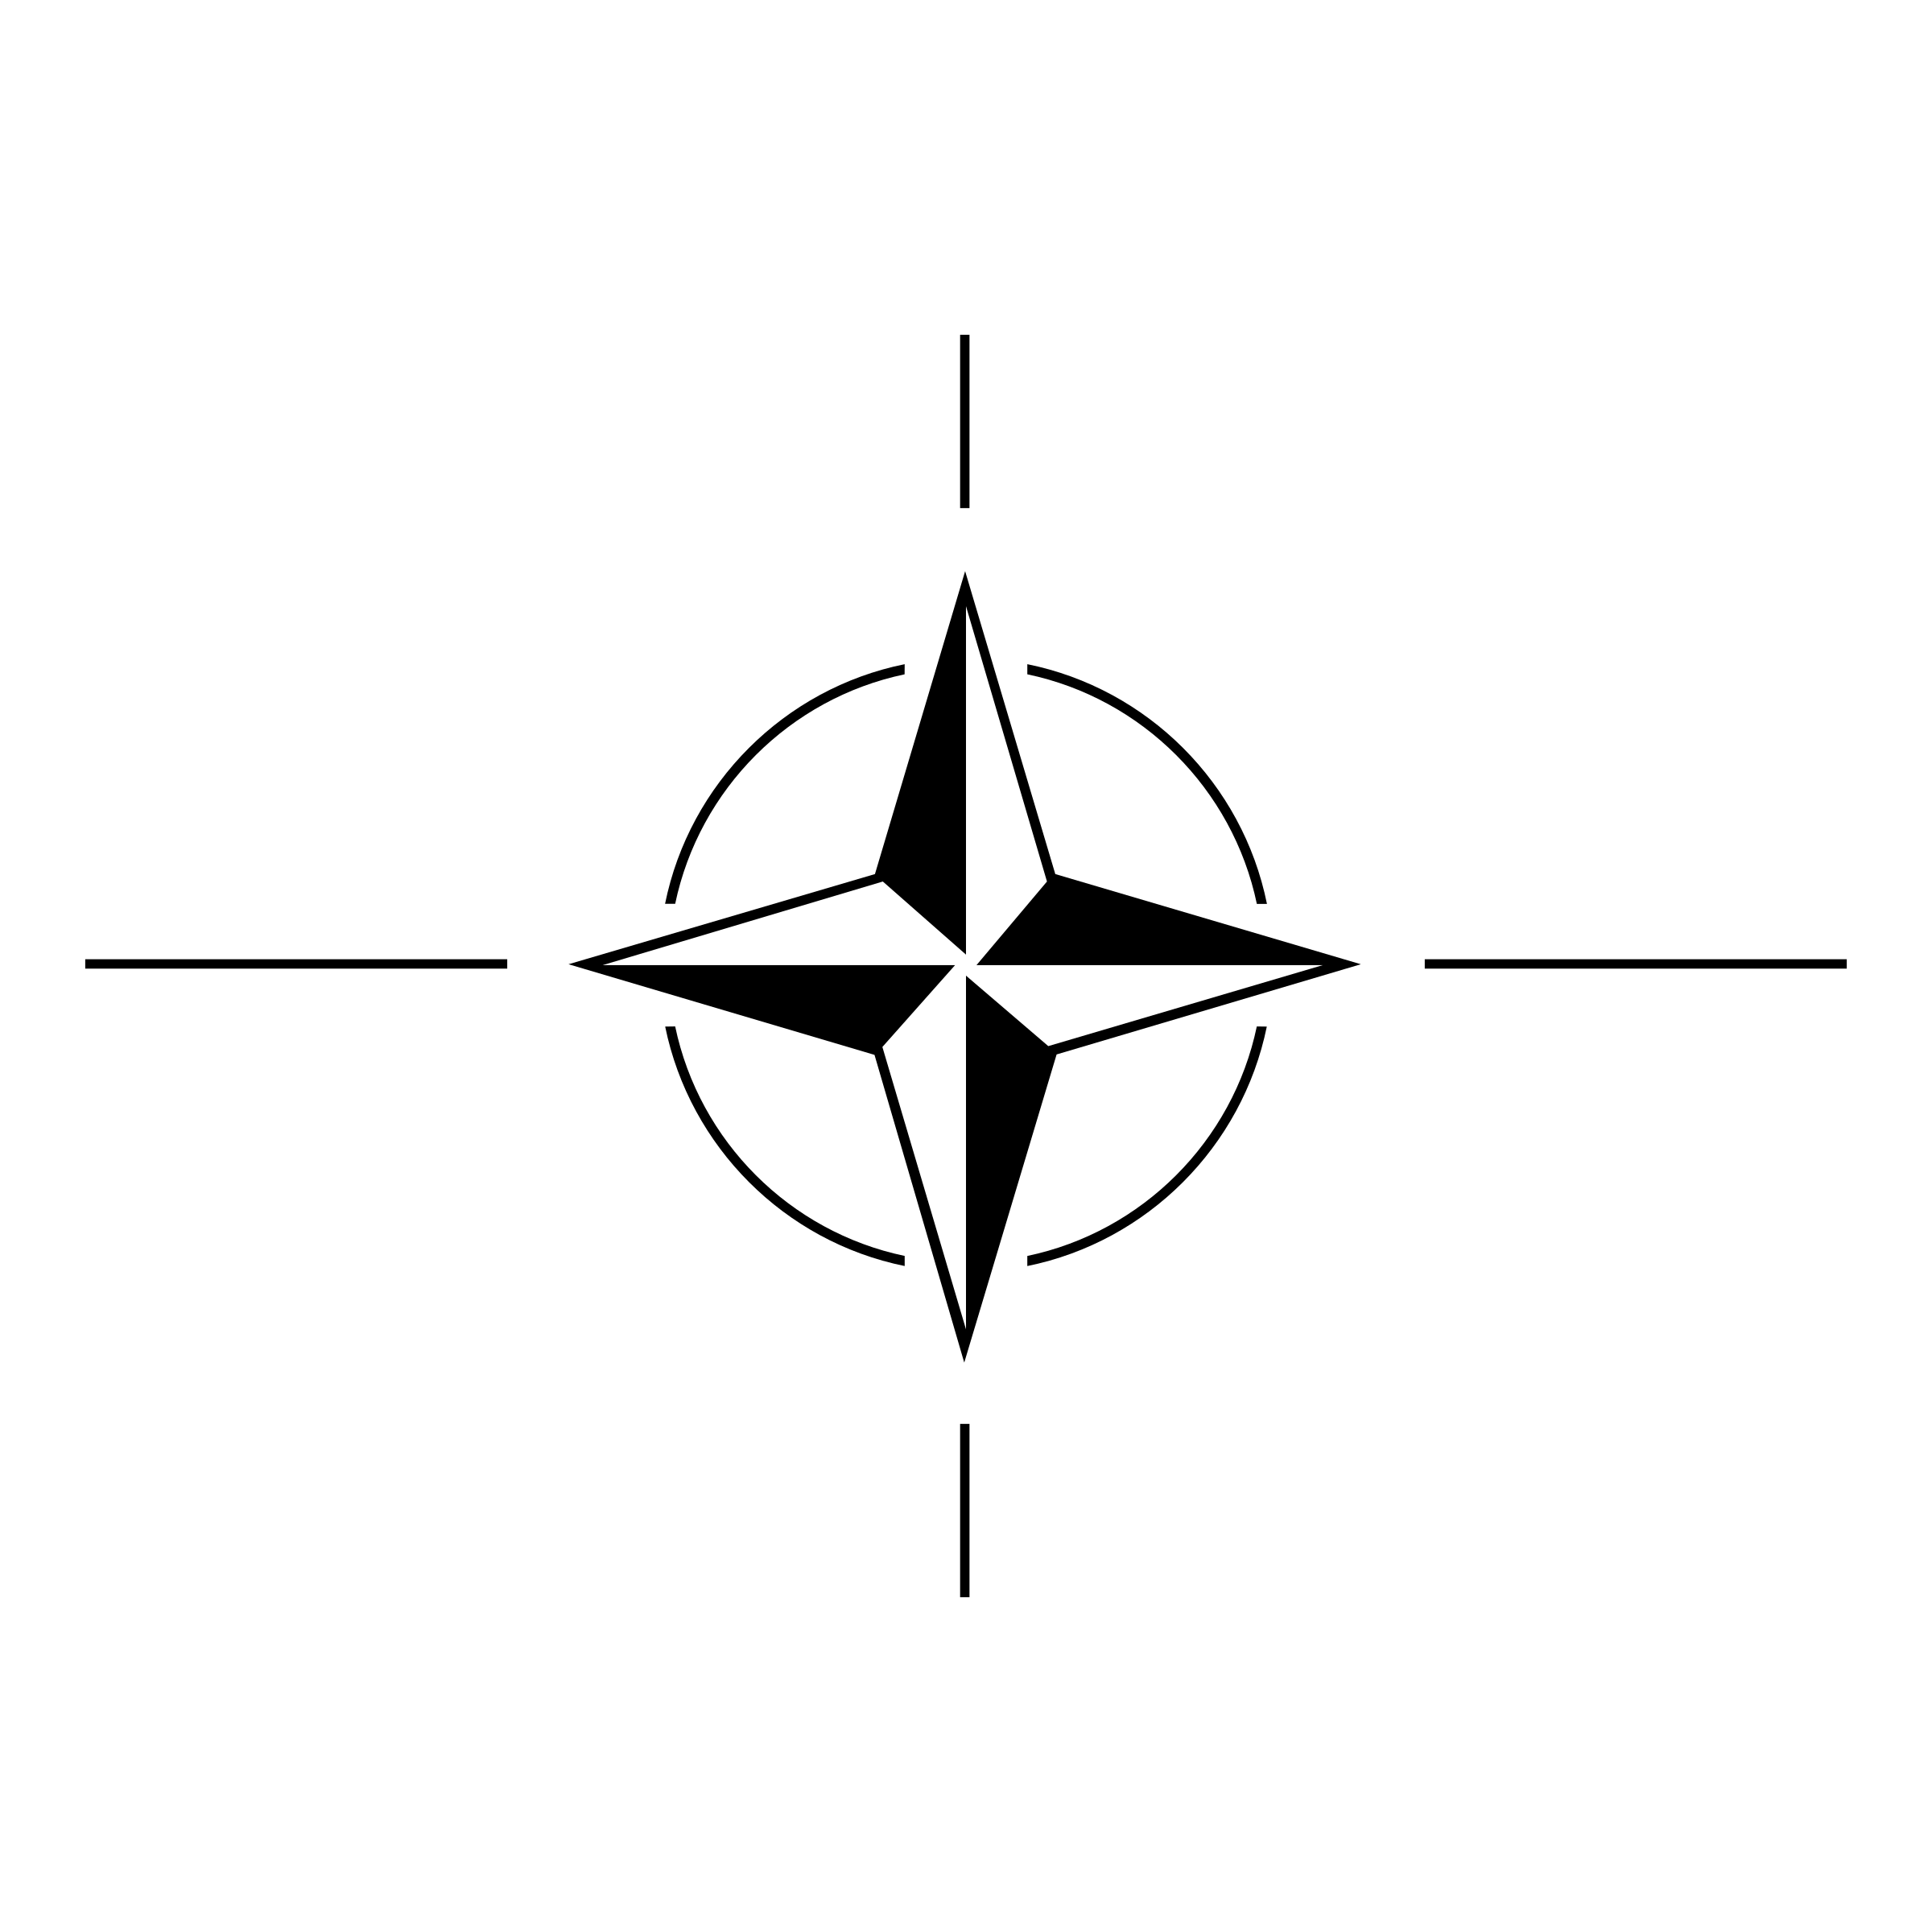 Nato Logo - NATO Logo PNG Transparent & SVG Vector - Freebie Supply